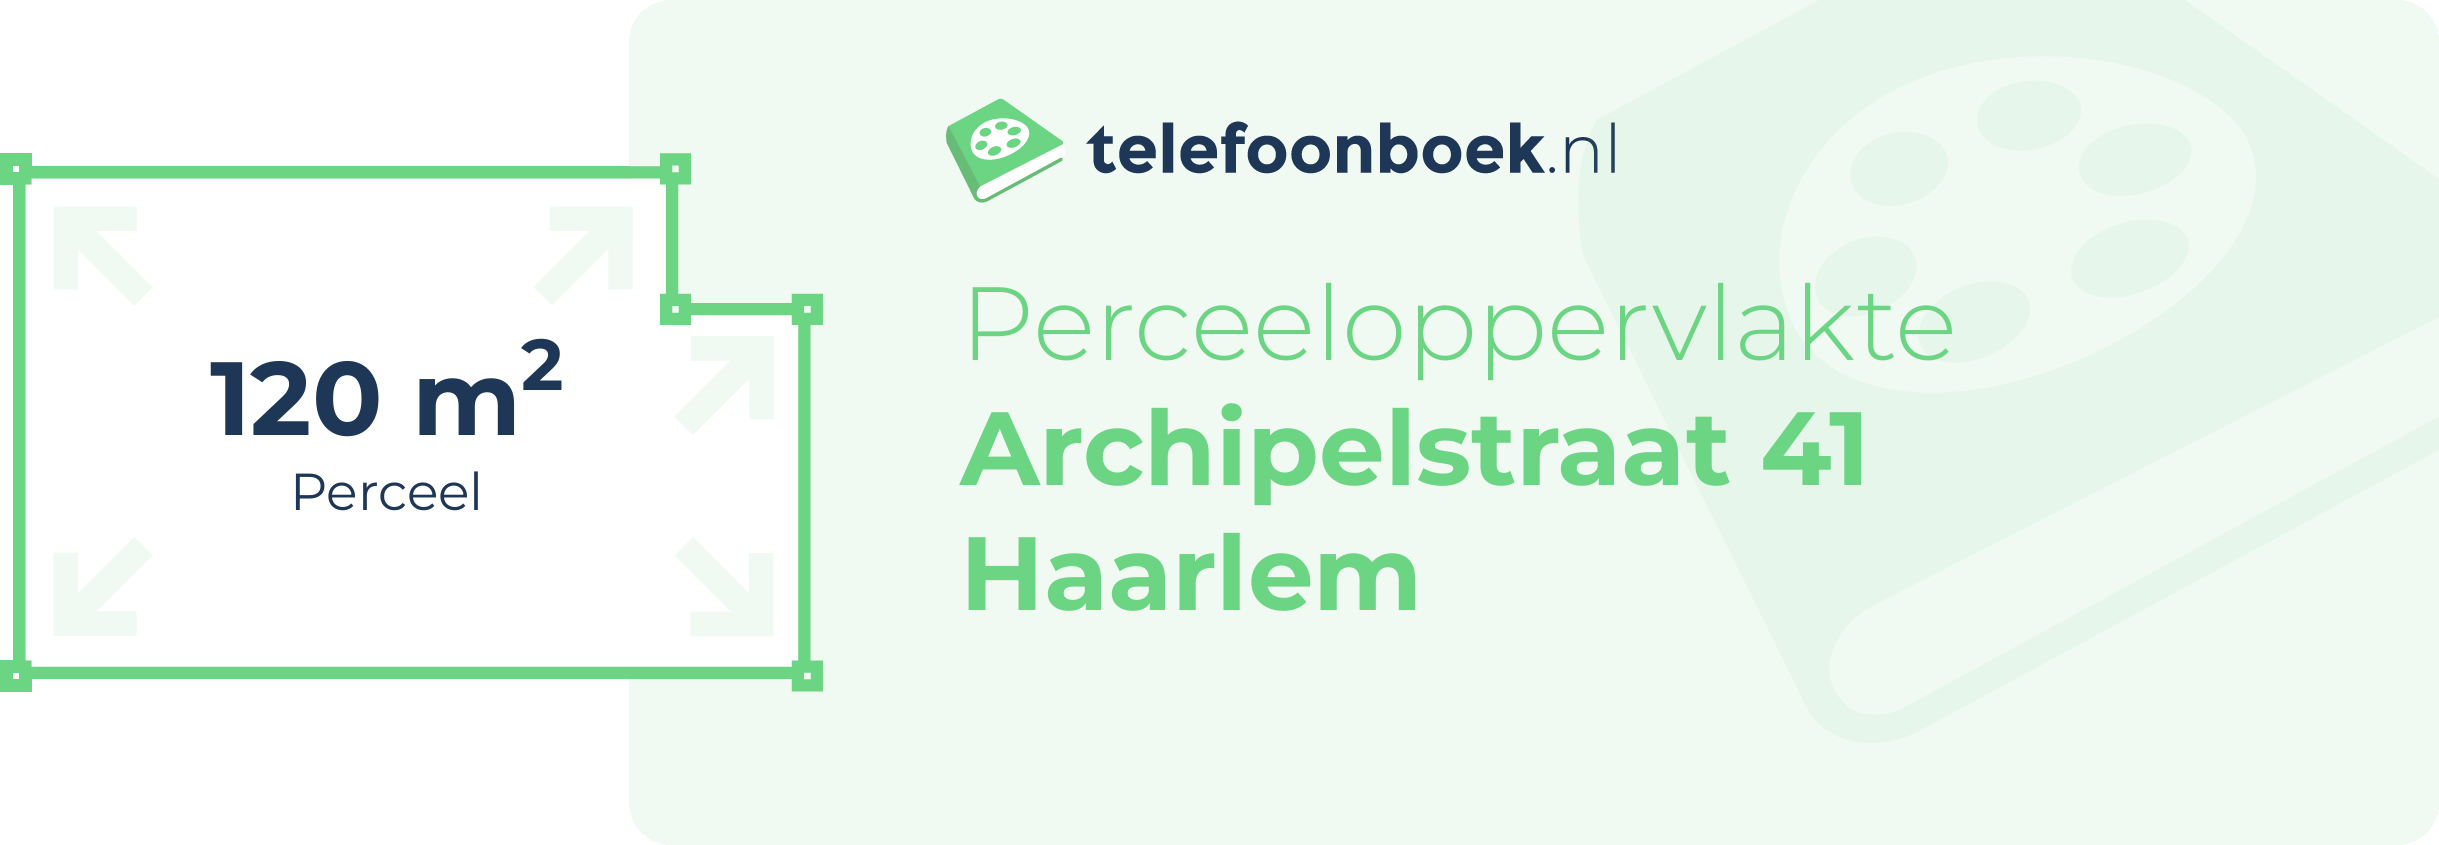 Perceeloppervlakte Archipelstraat 41 Haarlem